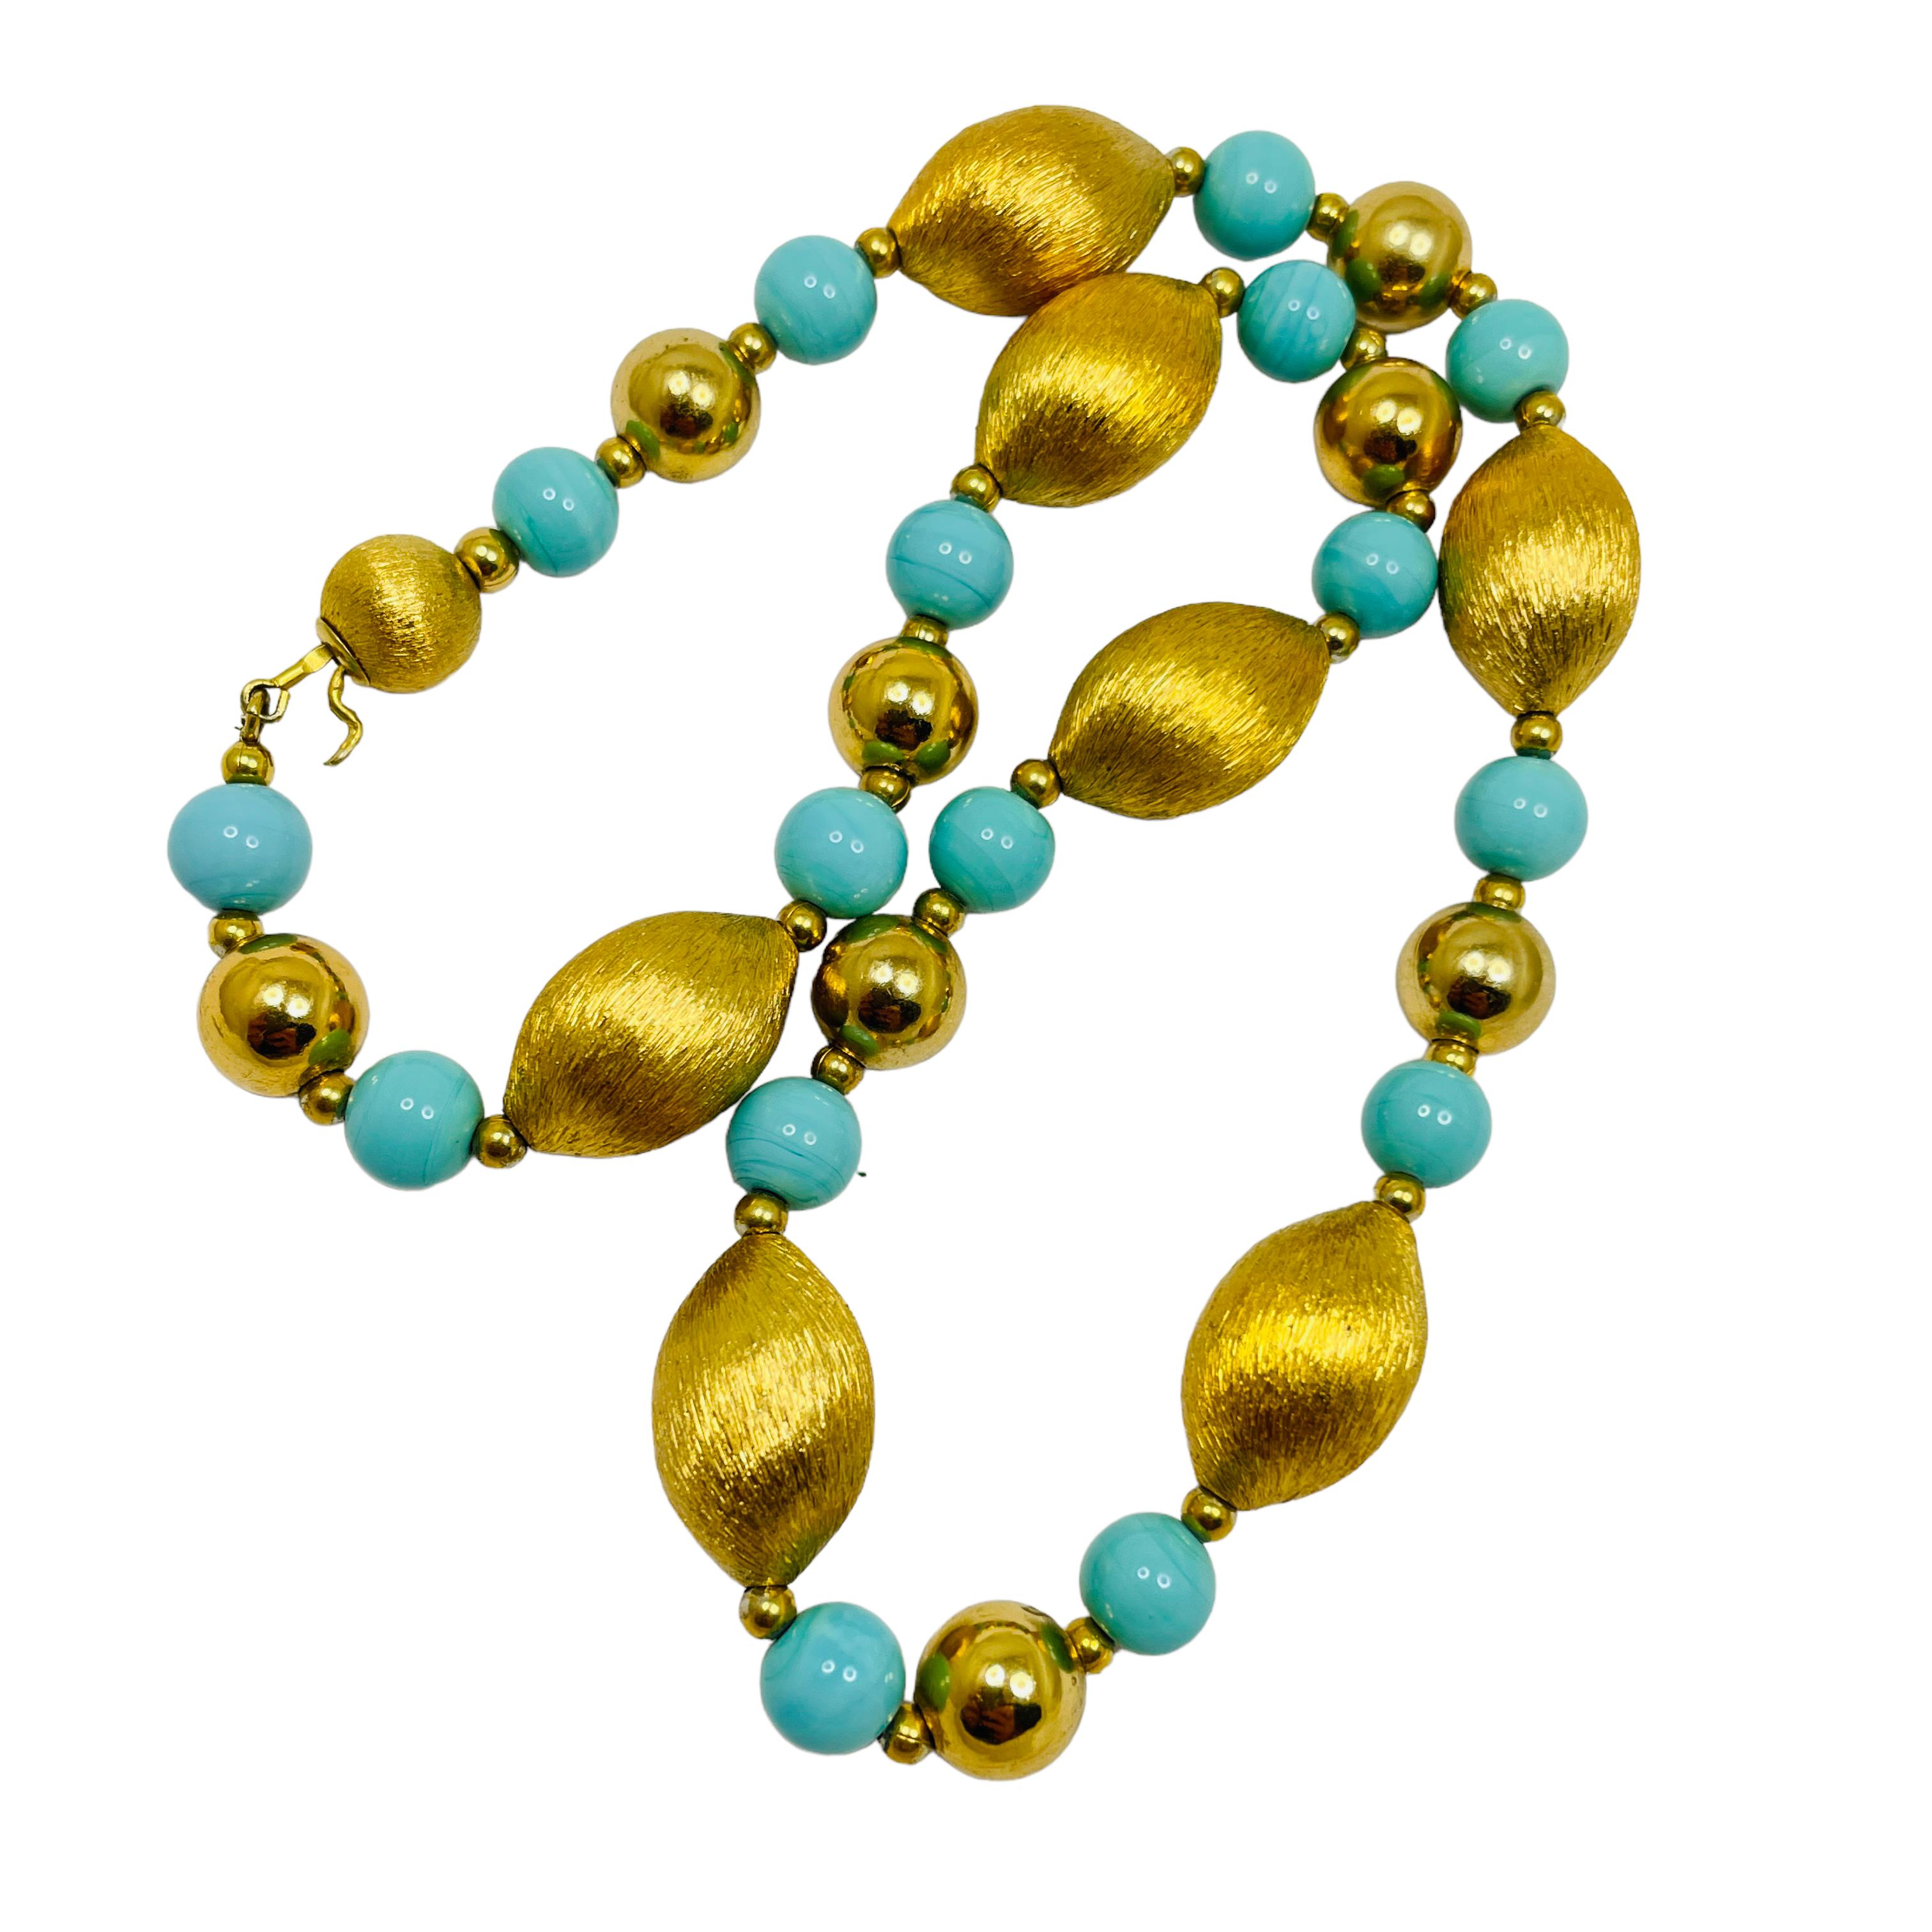 DETAILS

• unsigned 

• gold tone glass beads

• vintage designer necklace

MEASUREMENTS

• 16.75